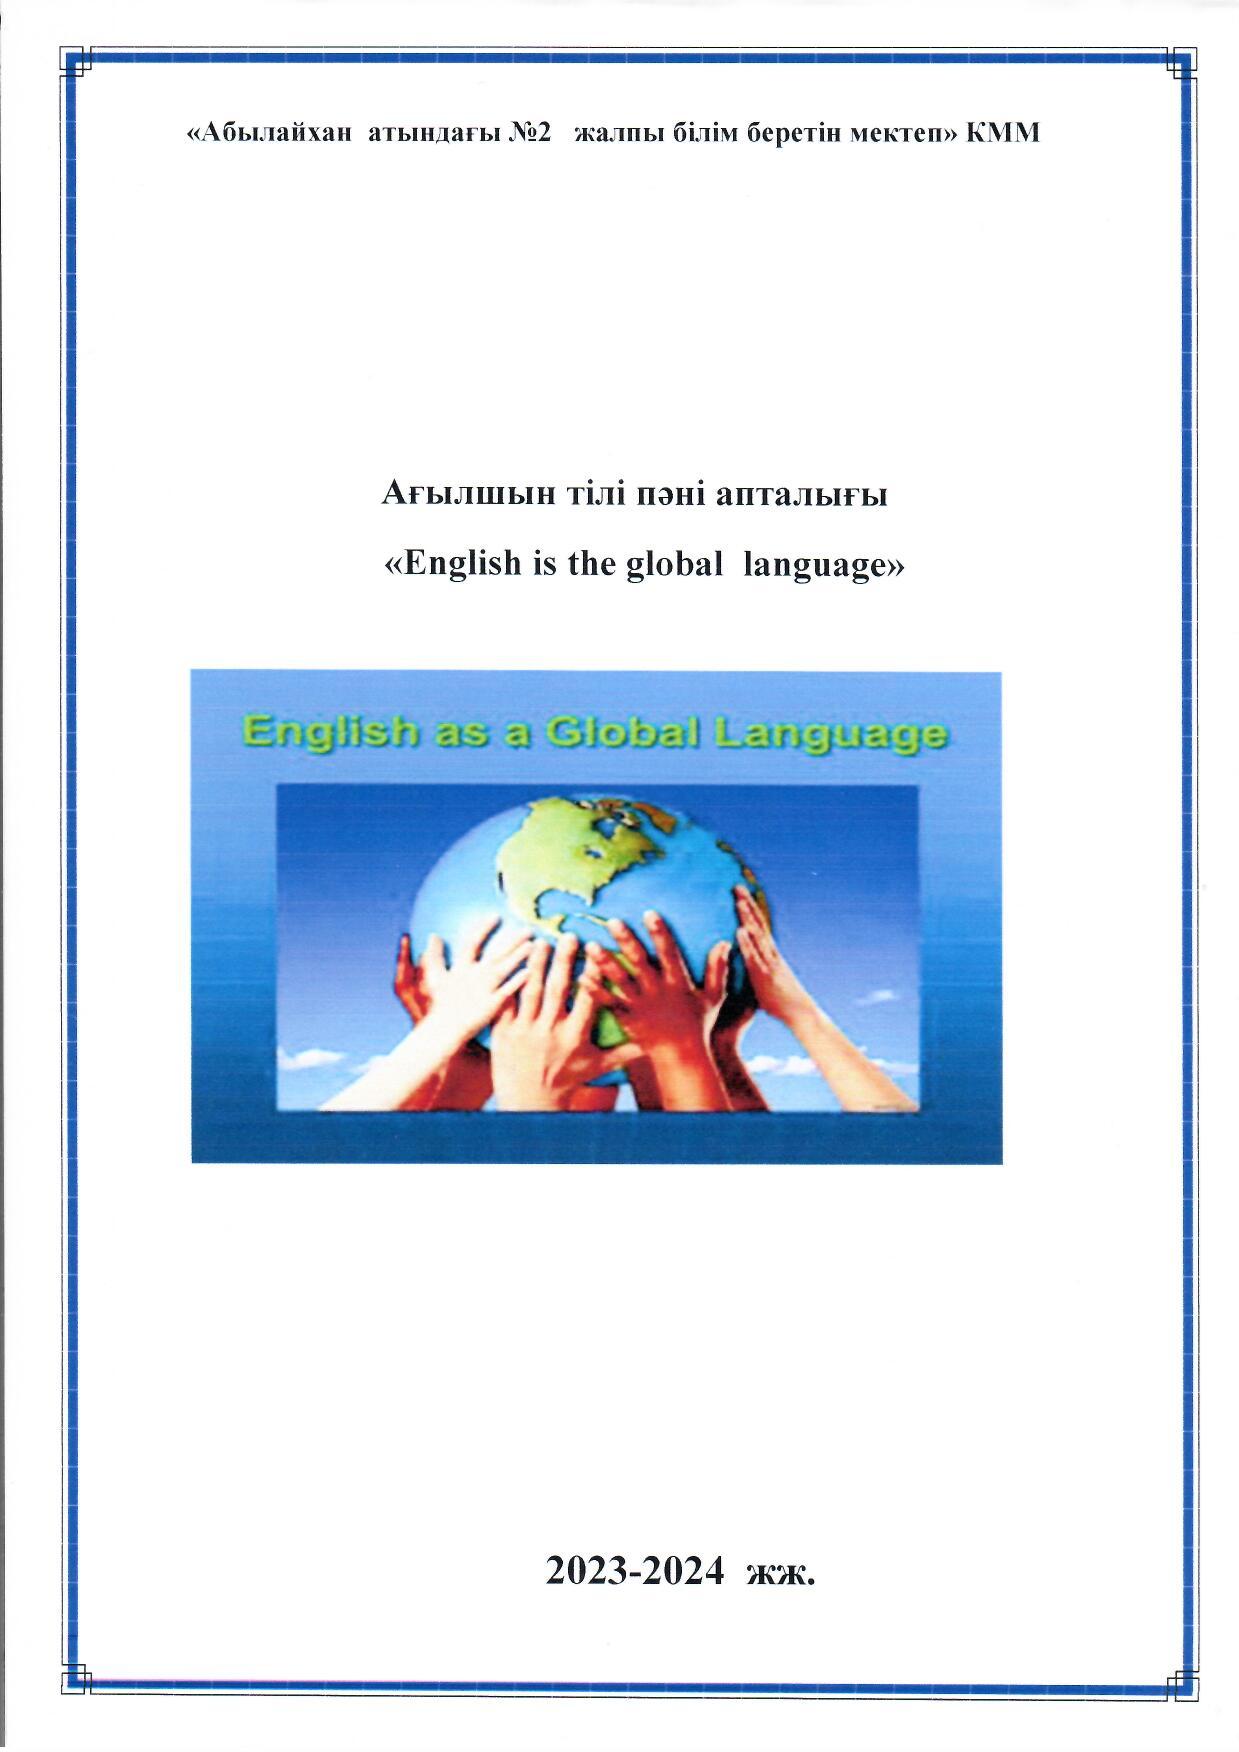 "English is the global language"